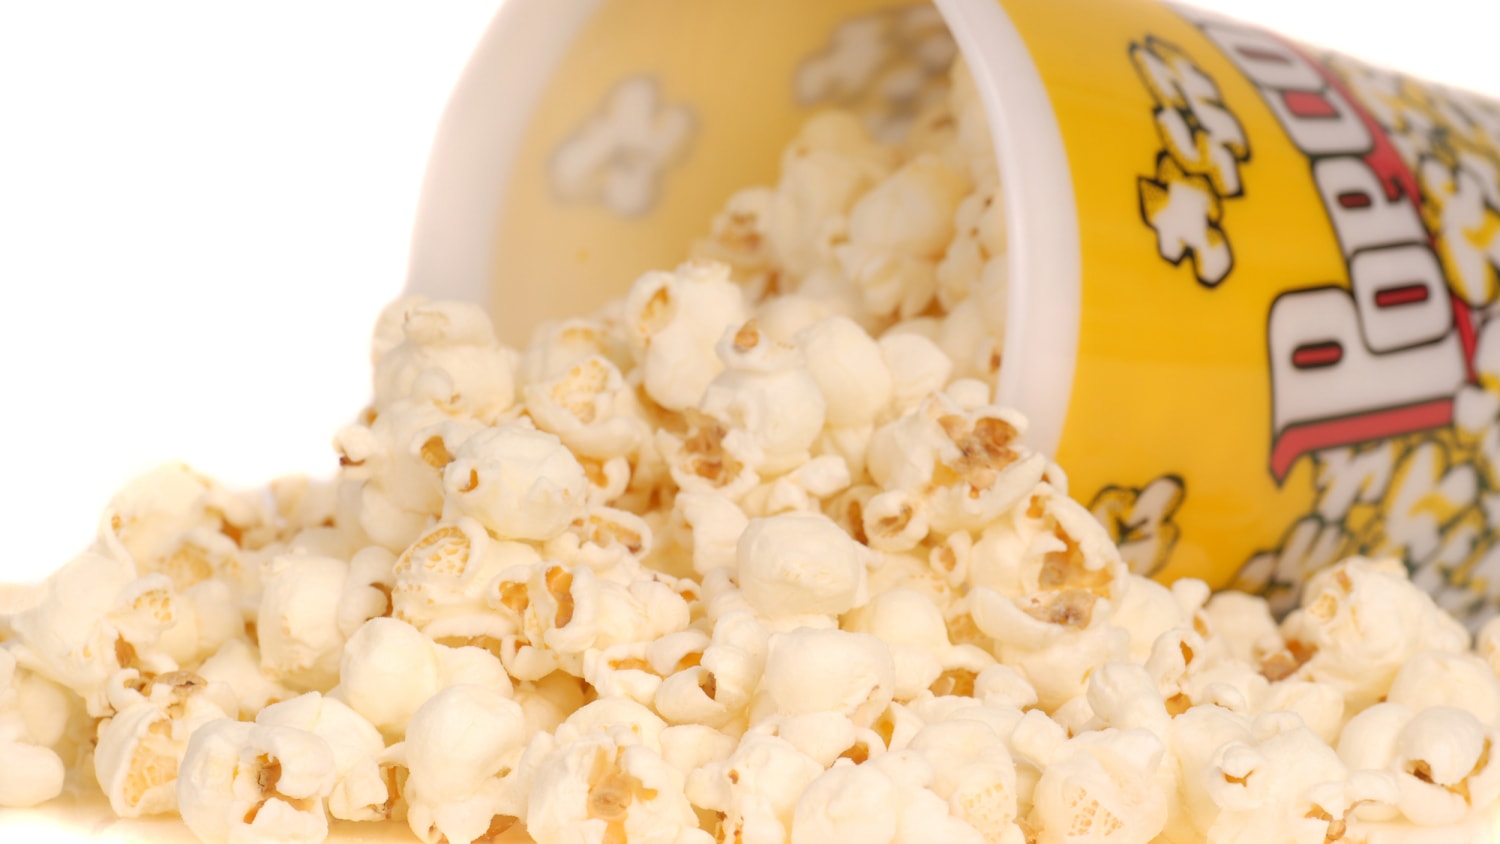 Movie Night Plastic Popcorn Bucket w/ Handle